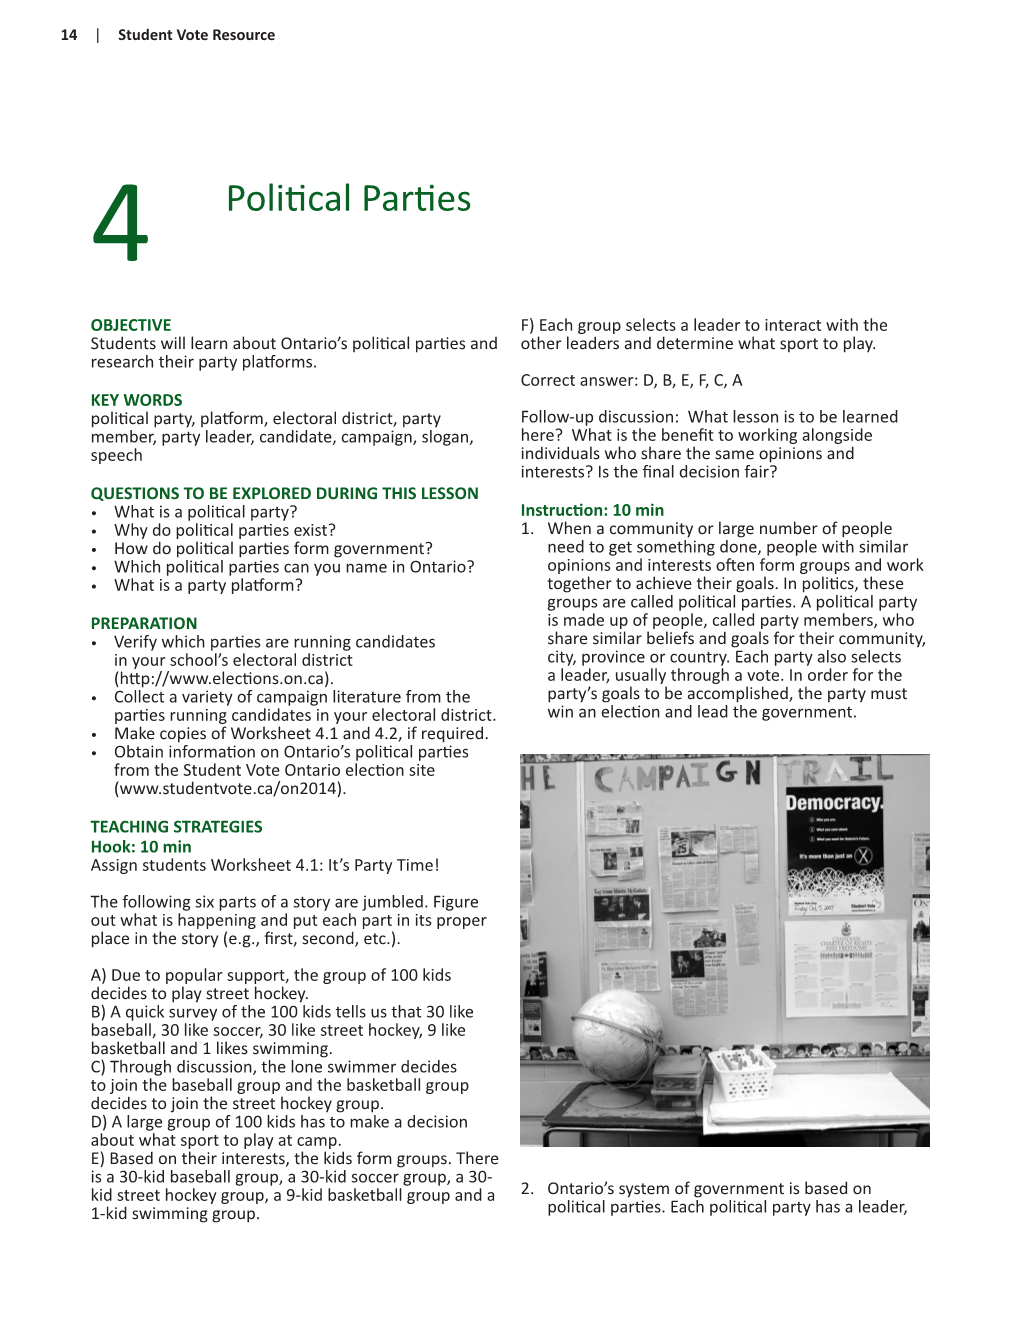 4 Political Parties